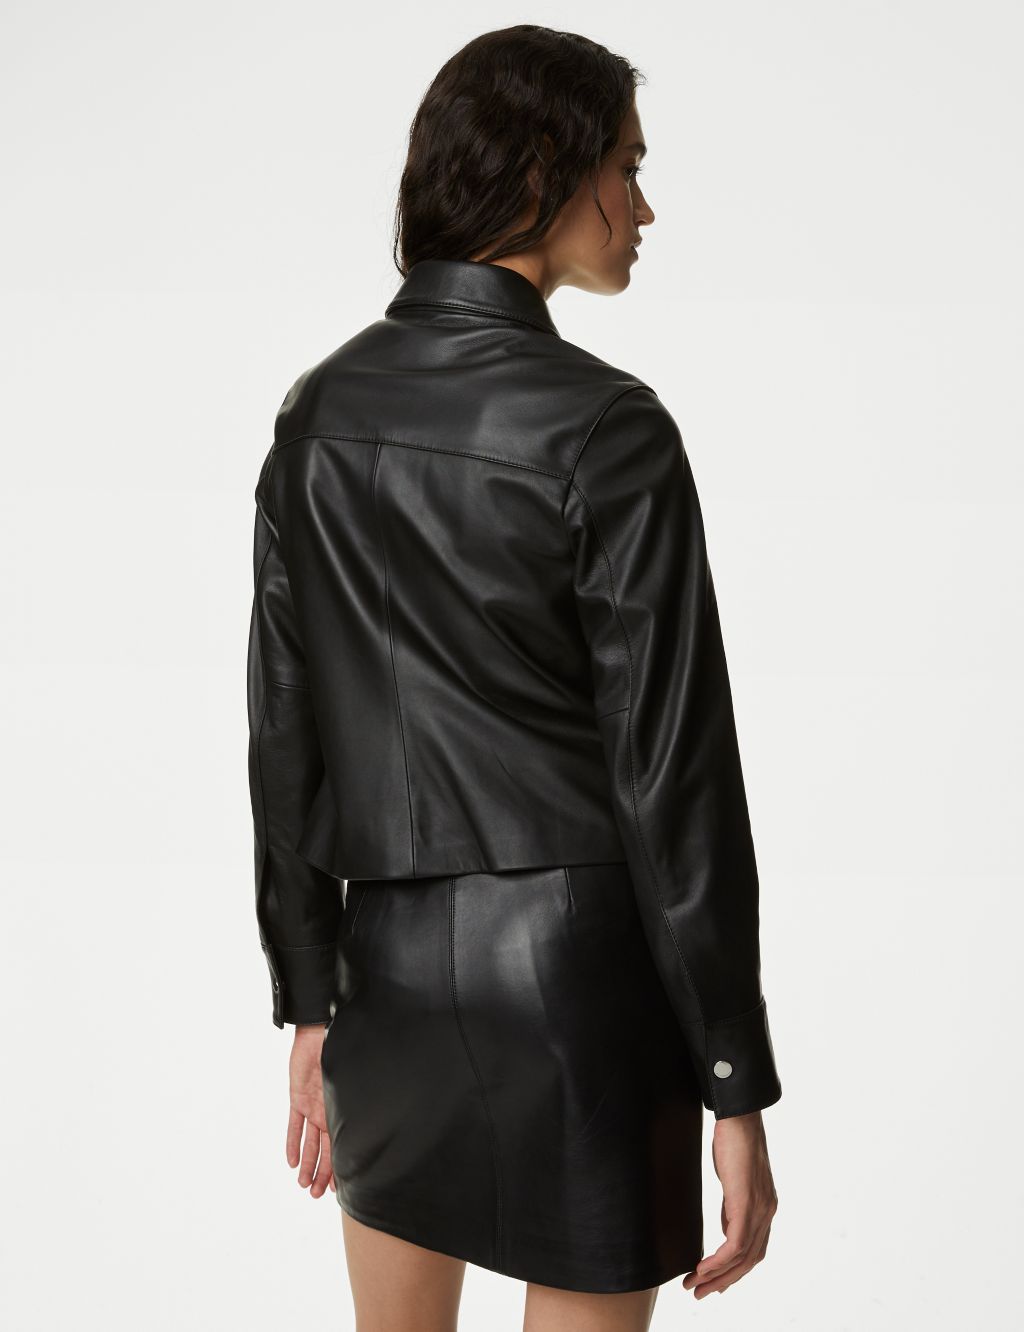 Leather Collared Jacket image 5